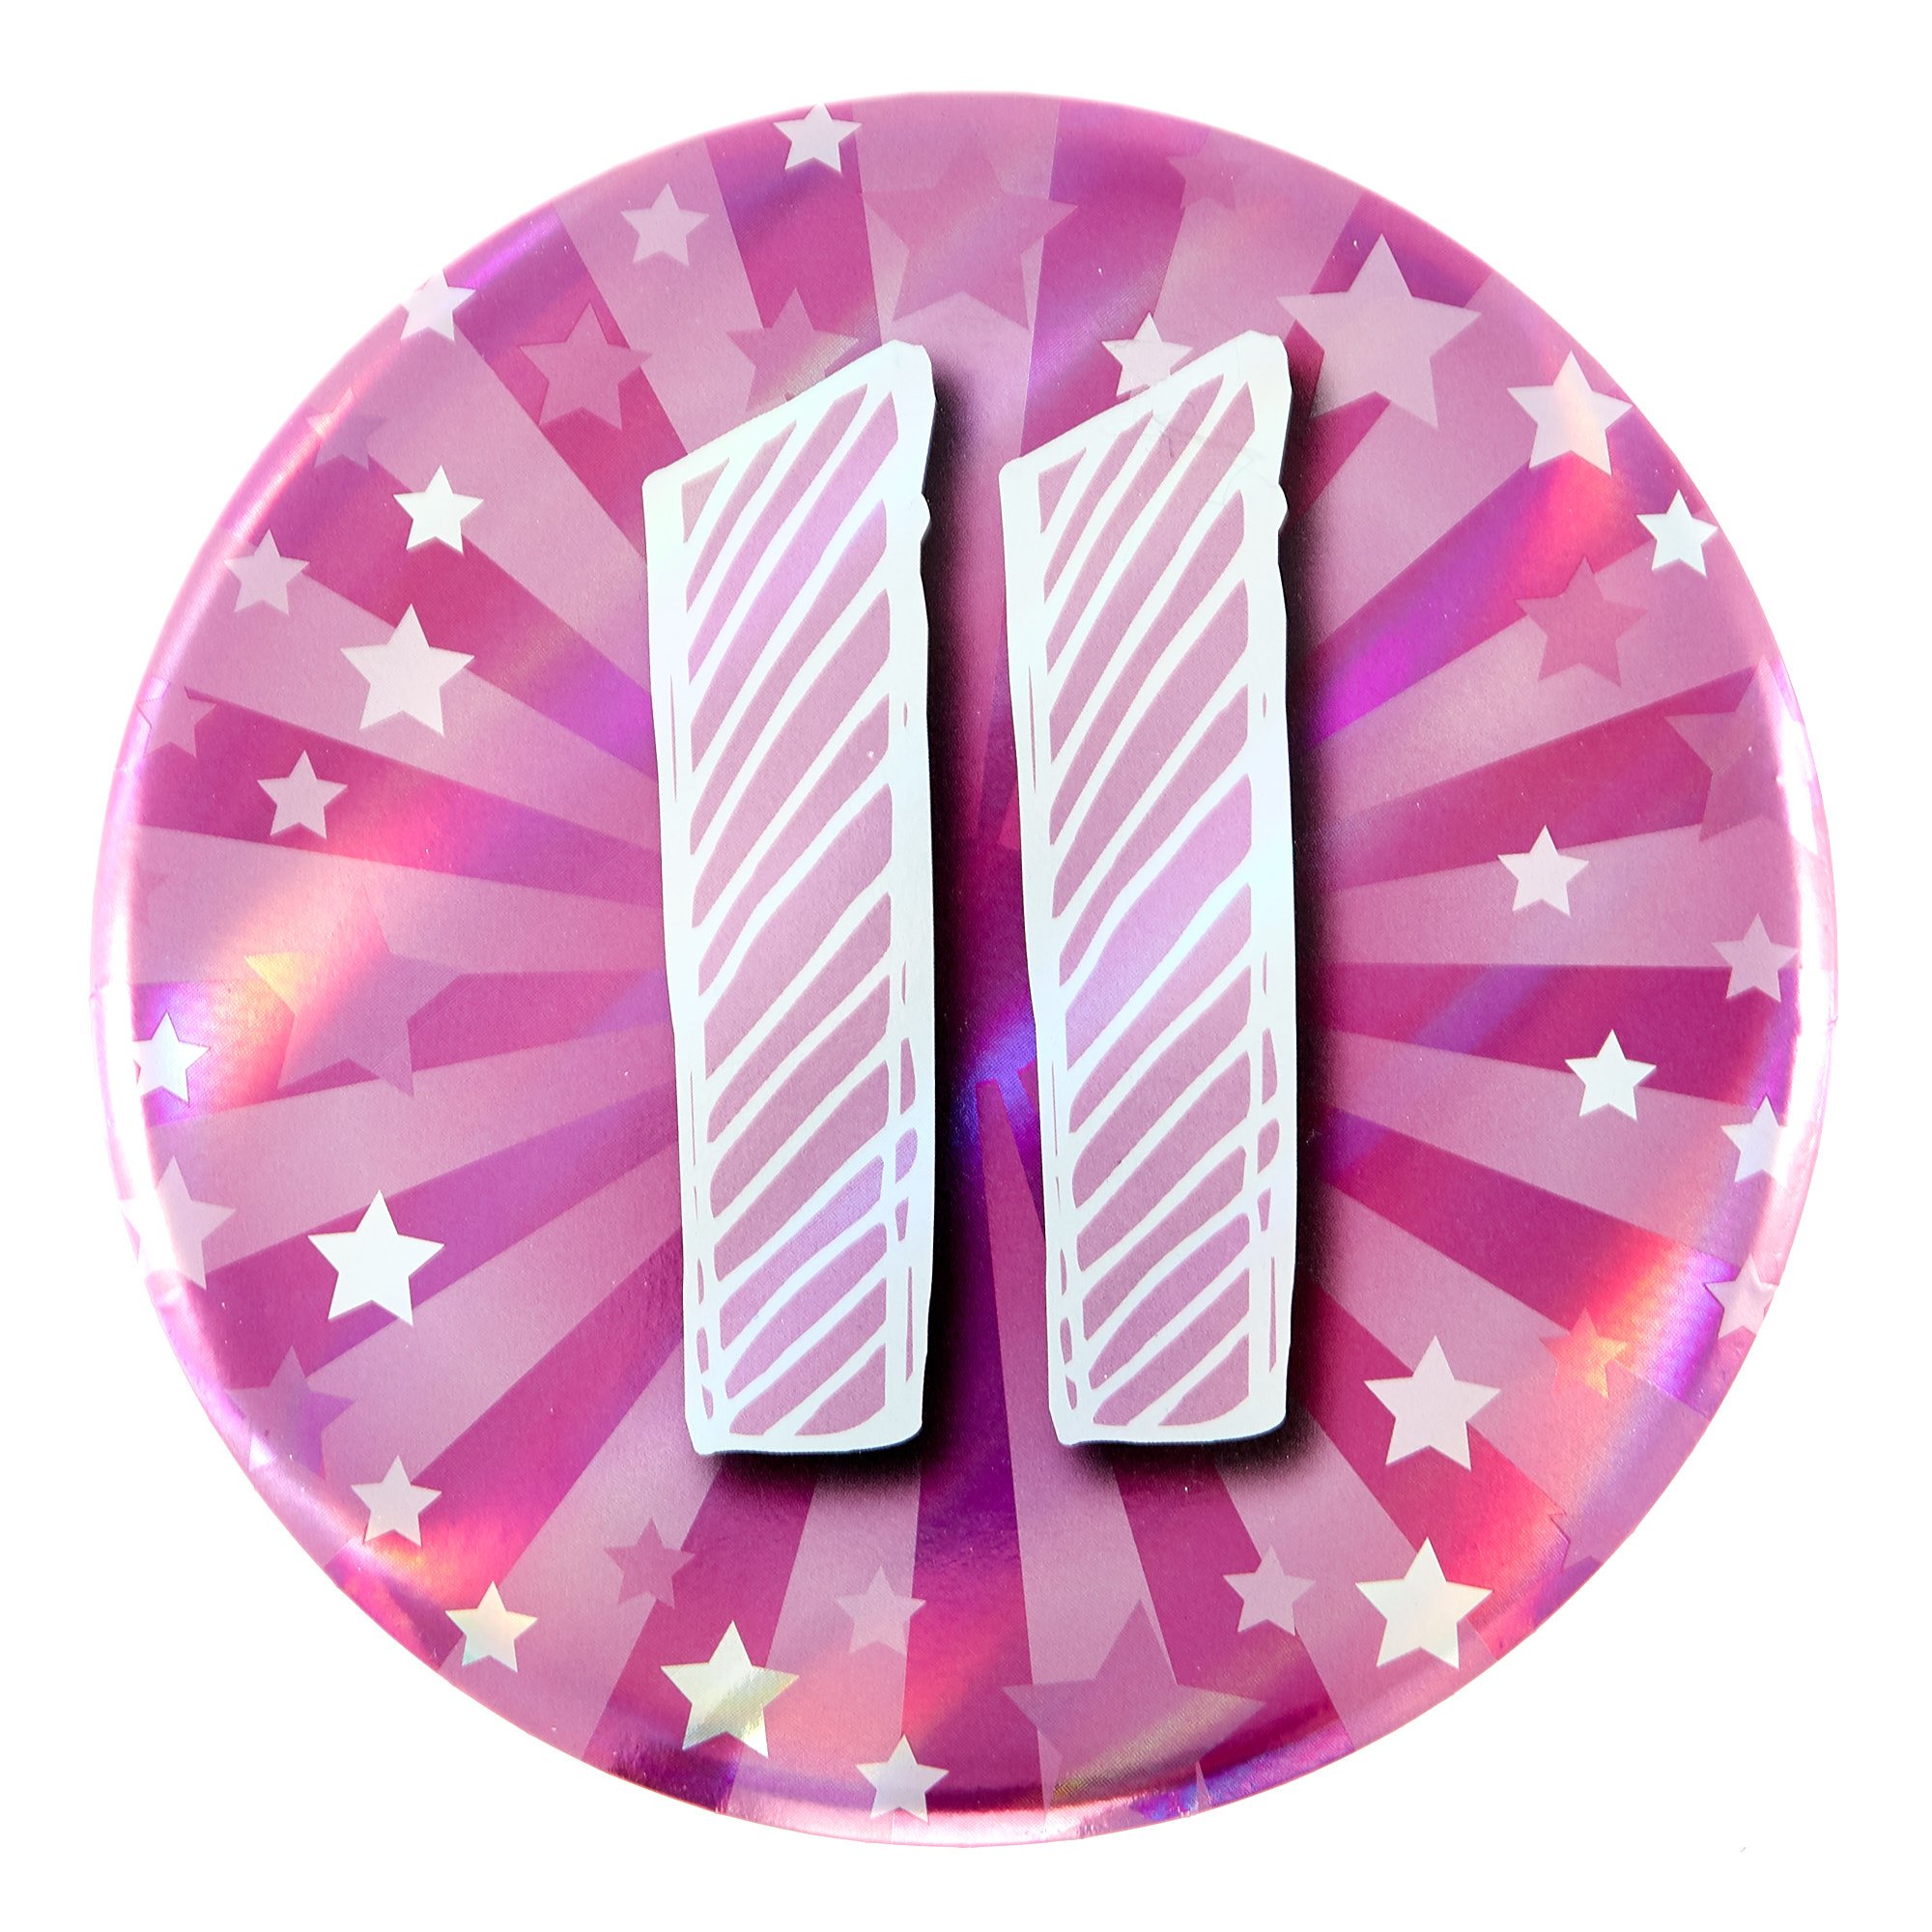 Giant 11th Birthday Badge - Pink